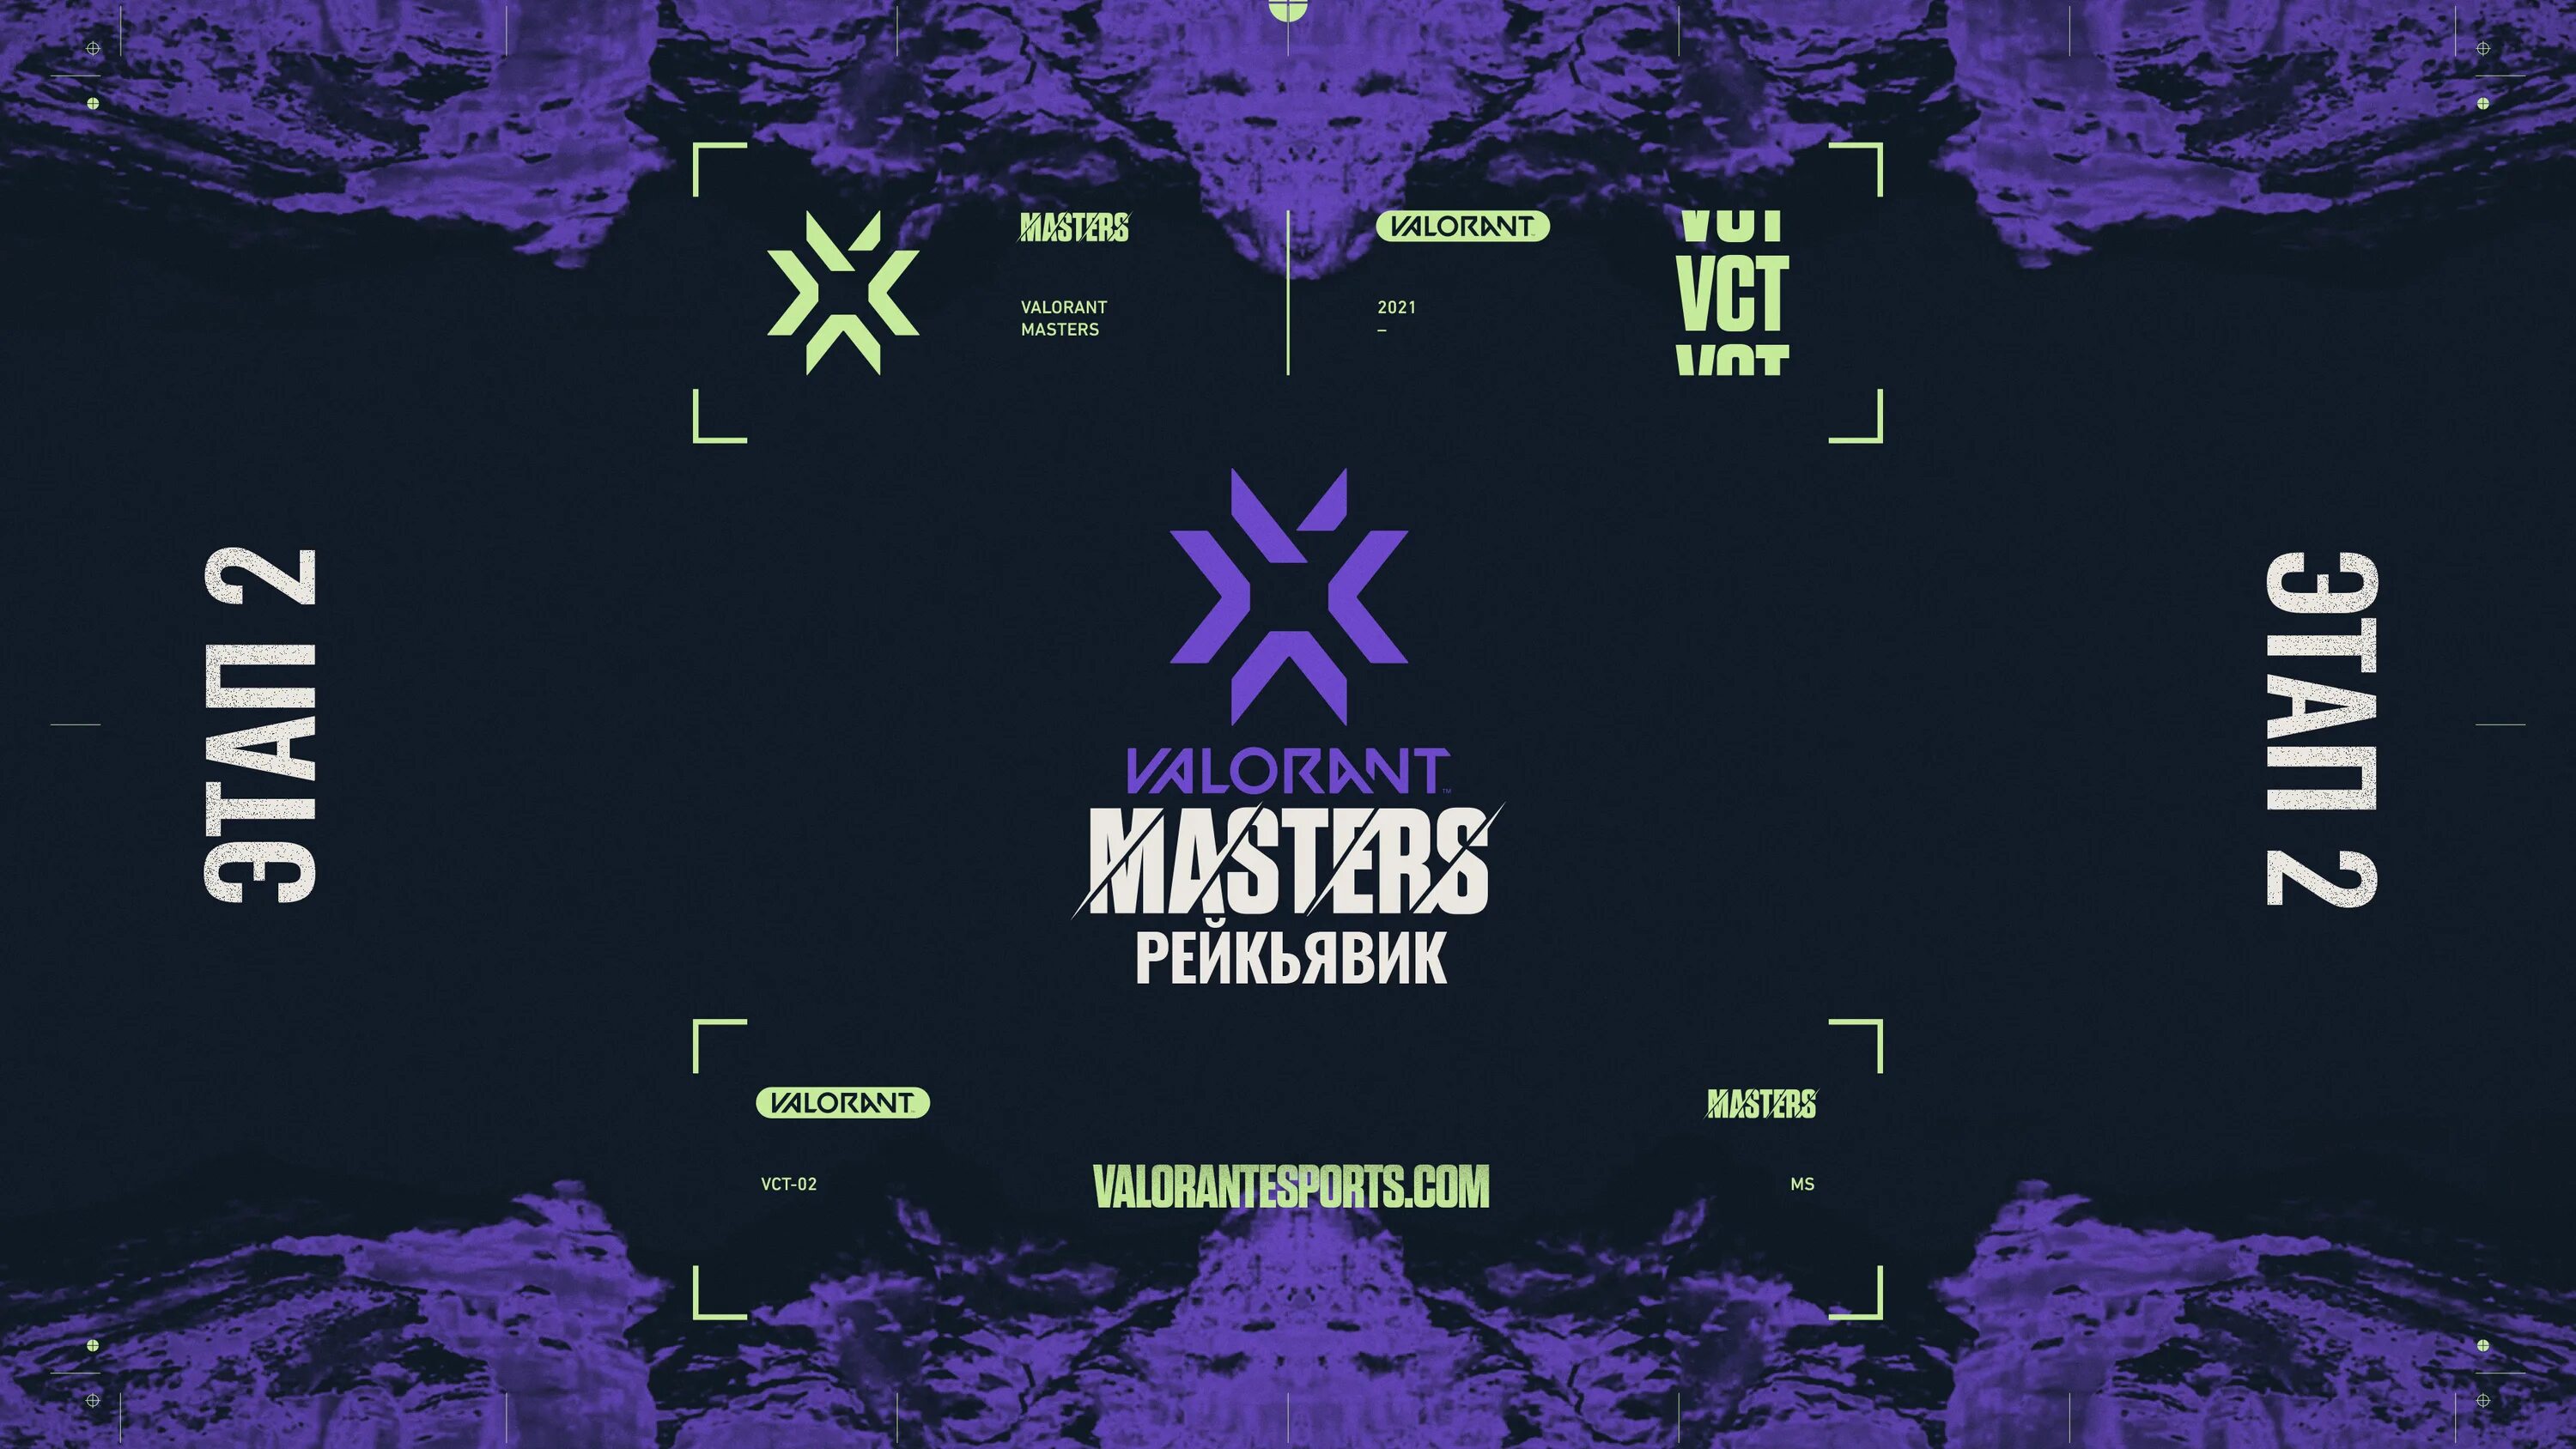 Vct 2024 masters madrid. Valorant Masters Reykjavik. VCT Masters Reykjavík. VCT Masters Reykjavík 2021. Valorant Masters Reykjavik 2022.